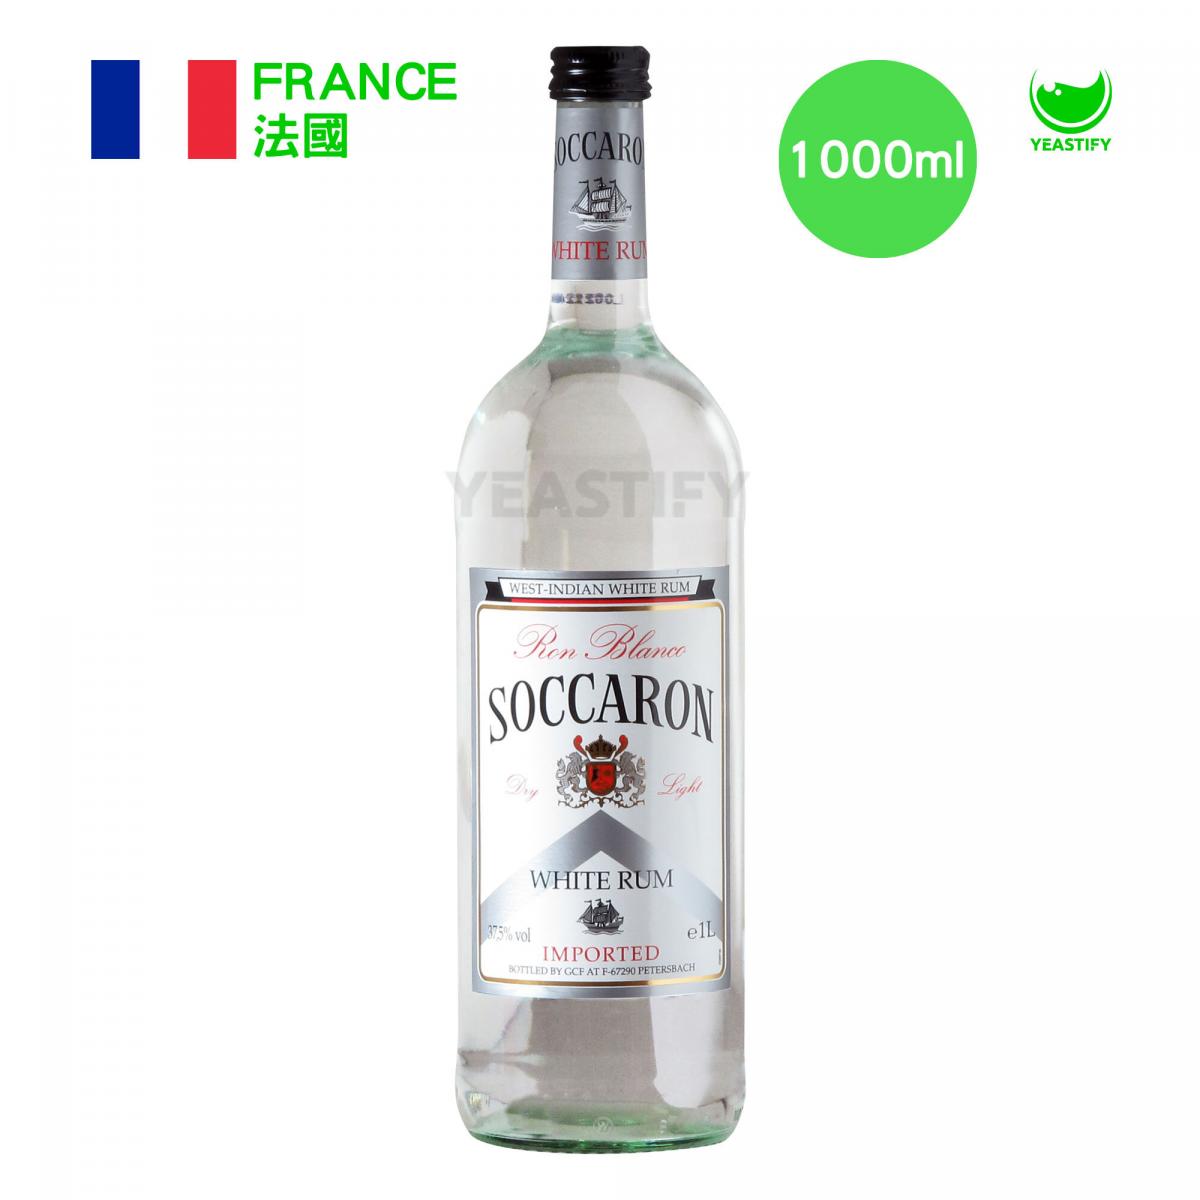 Soccaron White Rum